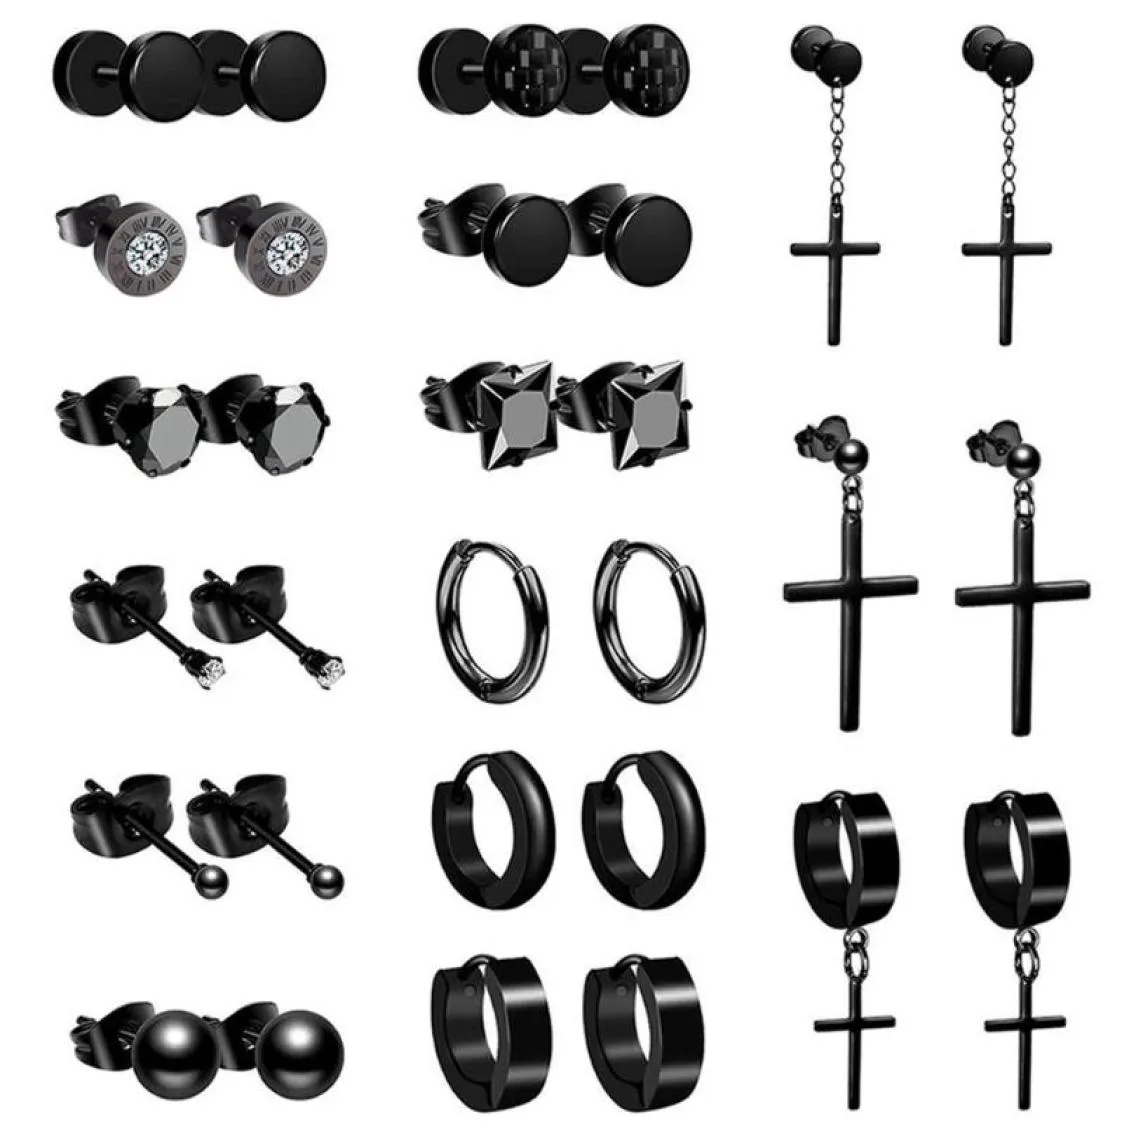 Boniskiss 15 Pairs 316L Stainless Steel Earrings For Men Women Hip Hop Black Piercing Stud Earring Fashion Jewelry Gift5694208